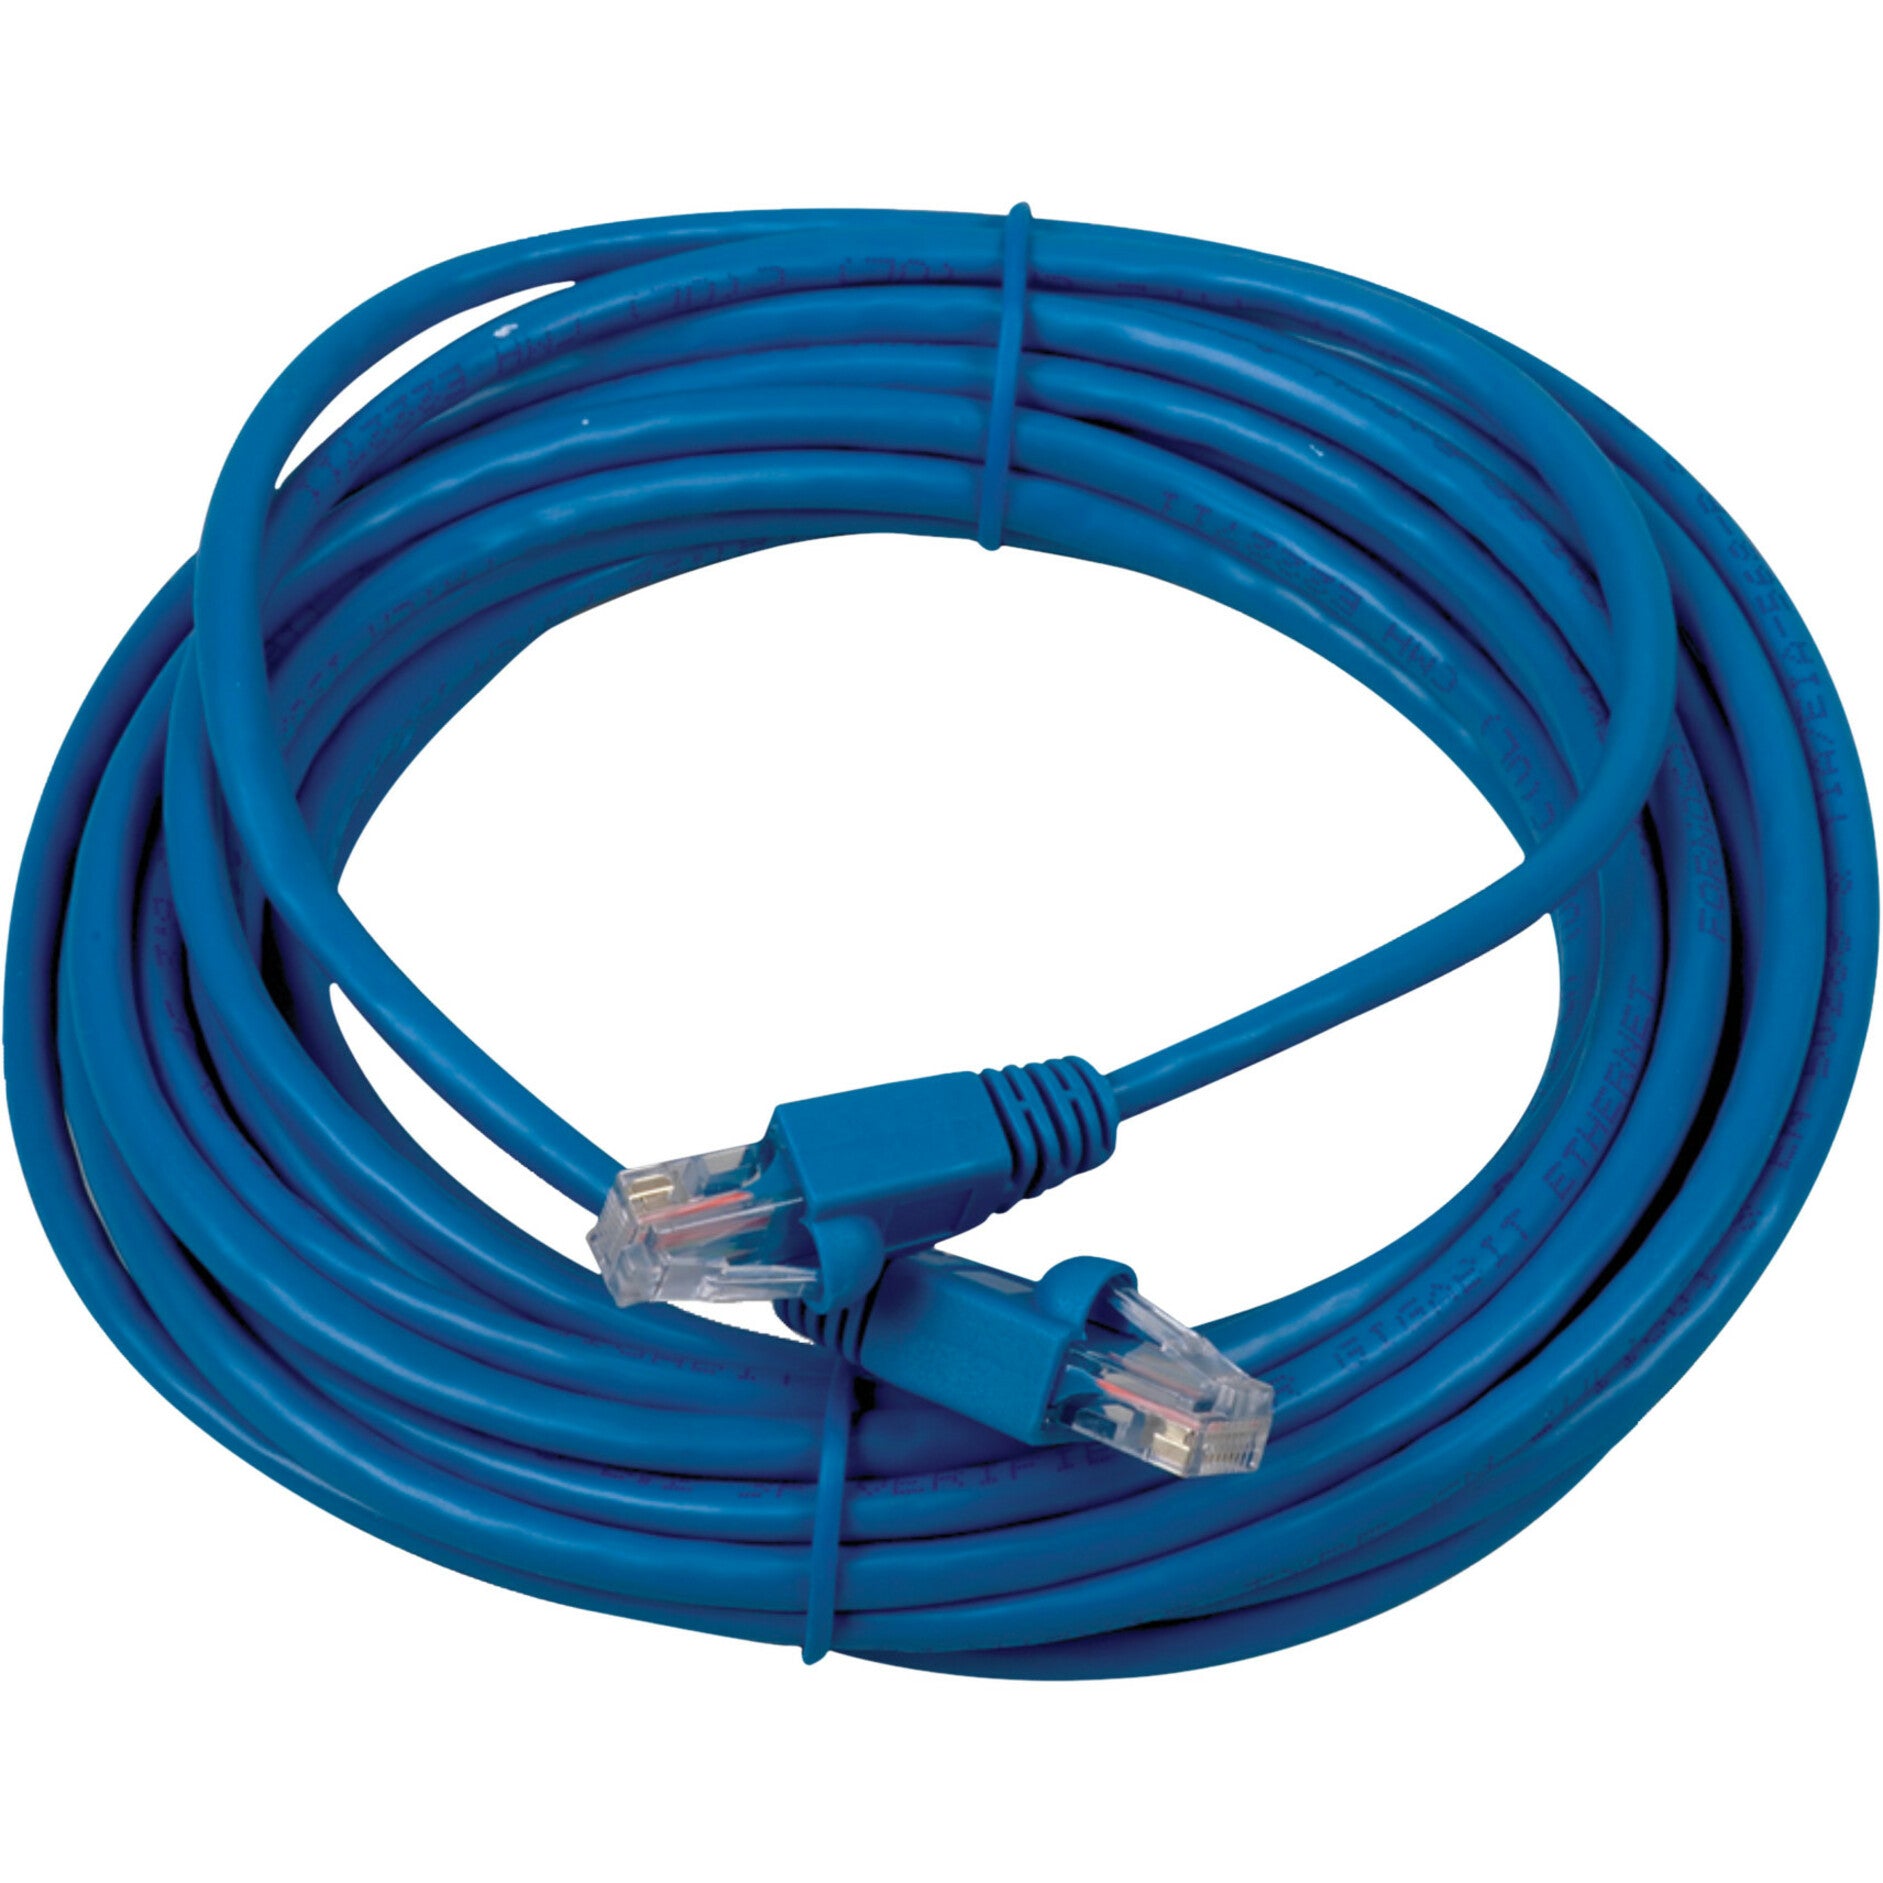 Cable de red RCA TPH532BR Cat5e de 25 pies - Azul Cable Ethernet de alta velocidad para conexiones de red fiables